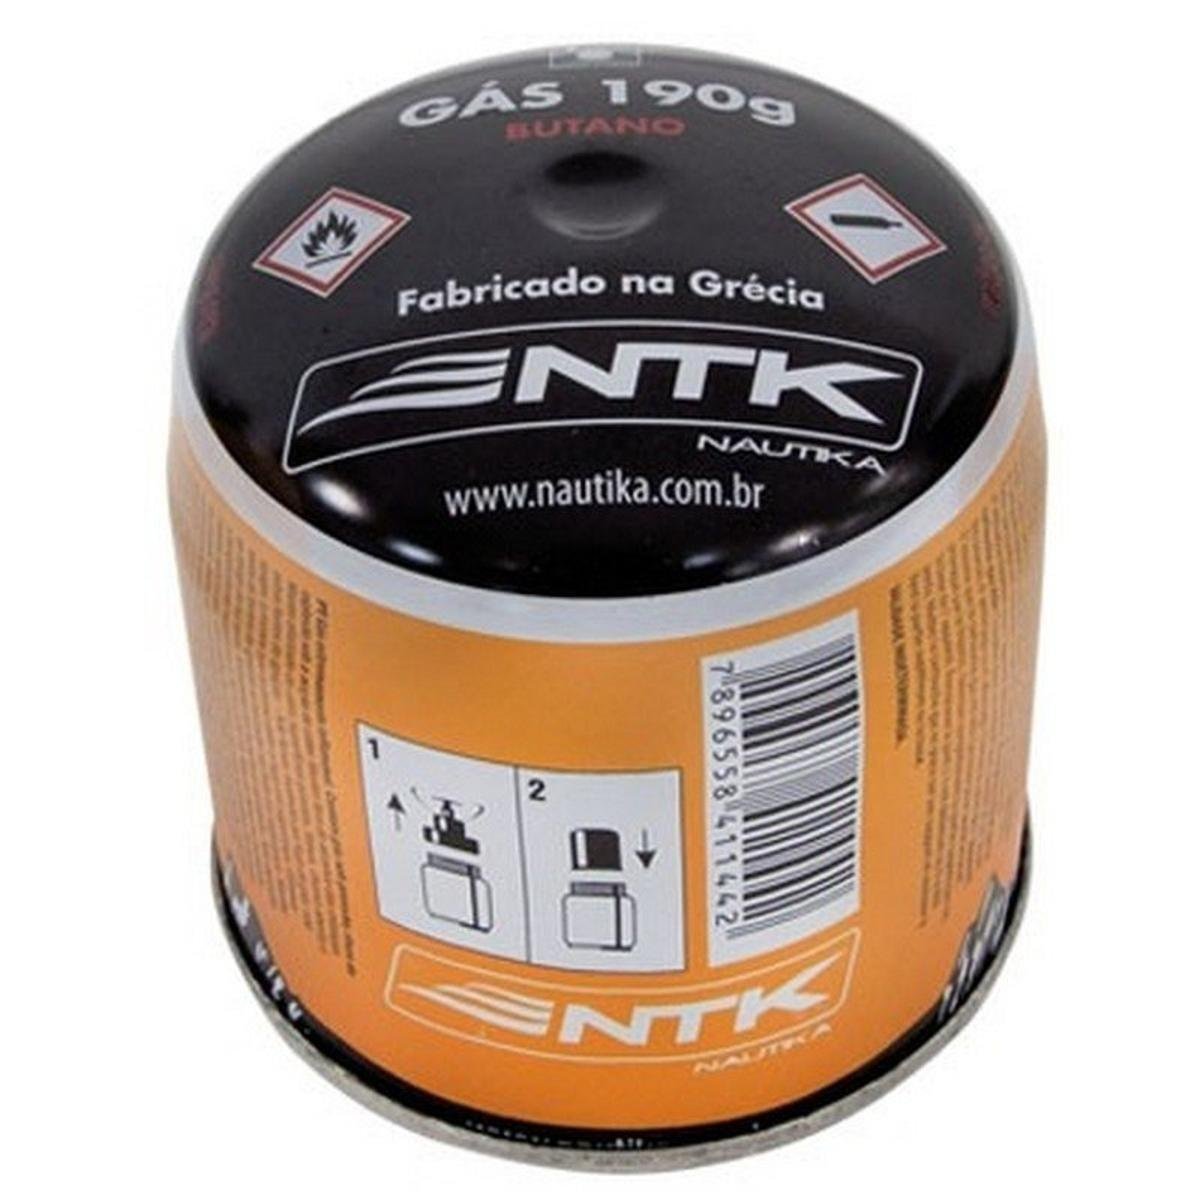 Refil Cartucho De Gas 190g Nautika